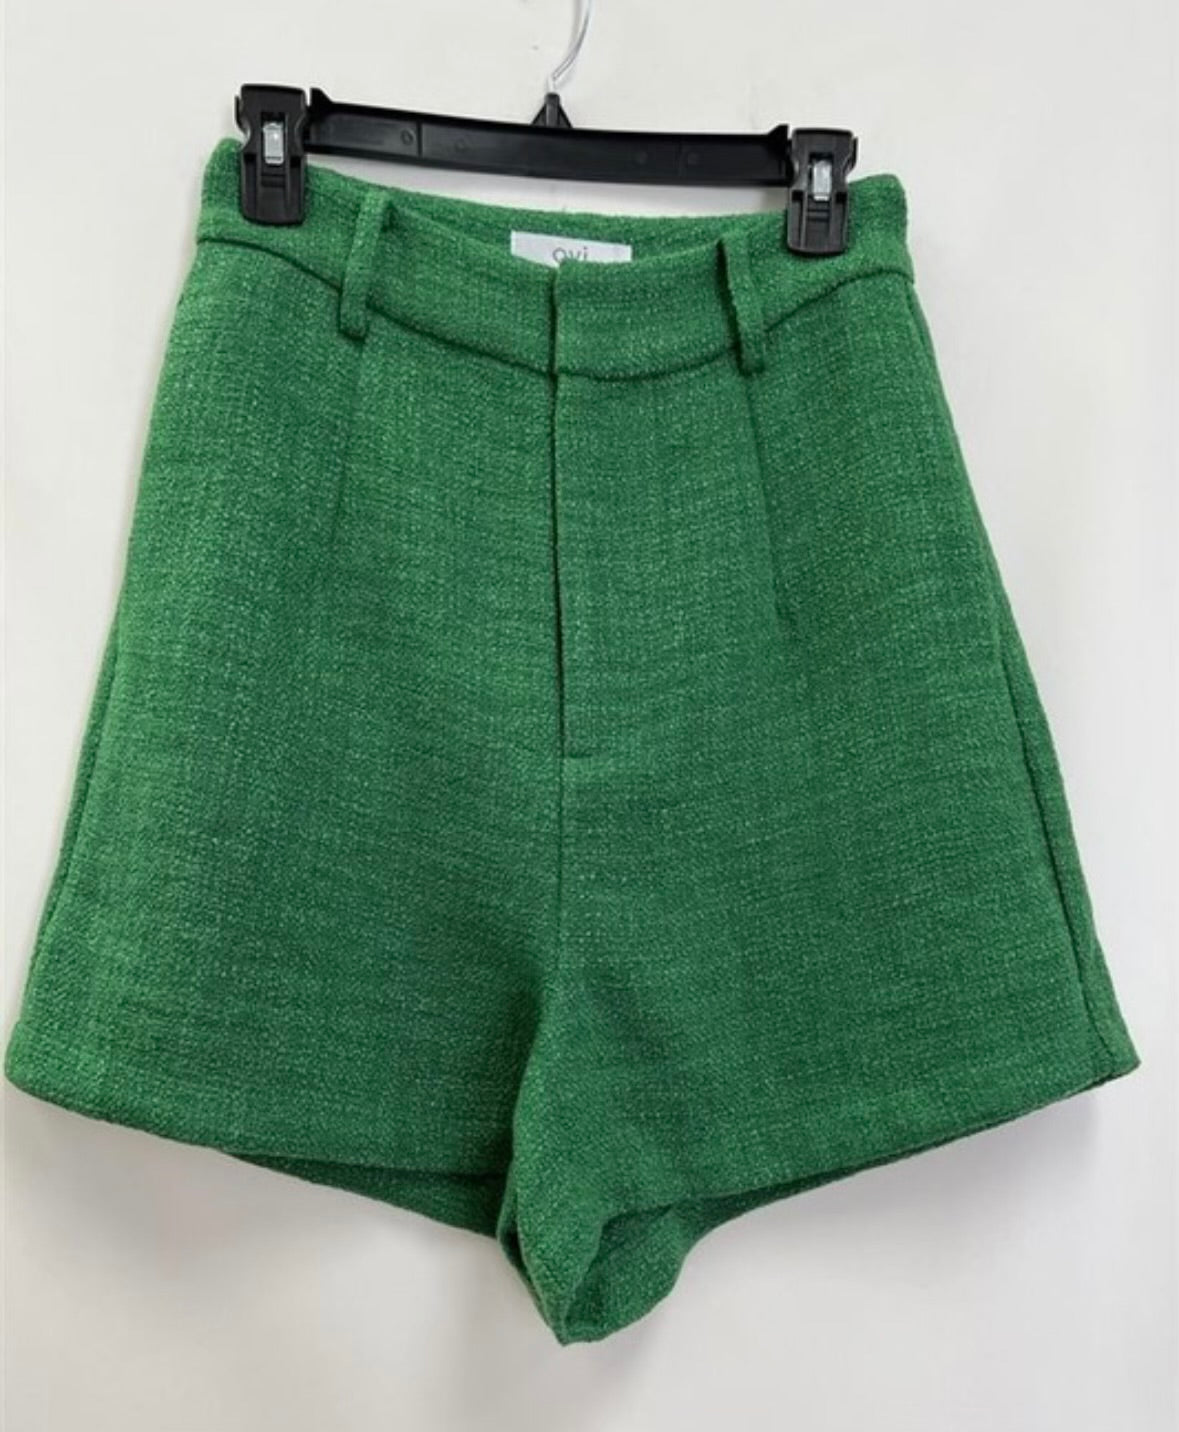 City Green Shorts